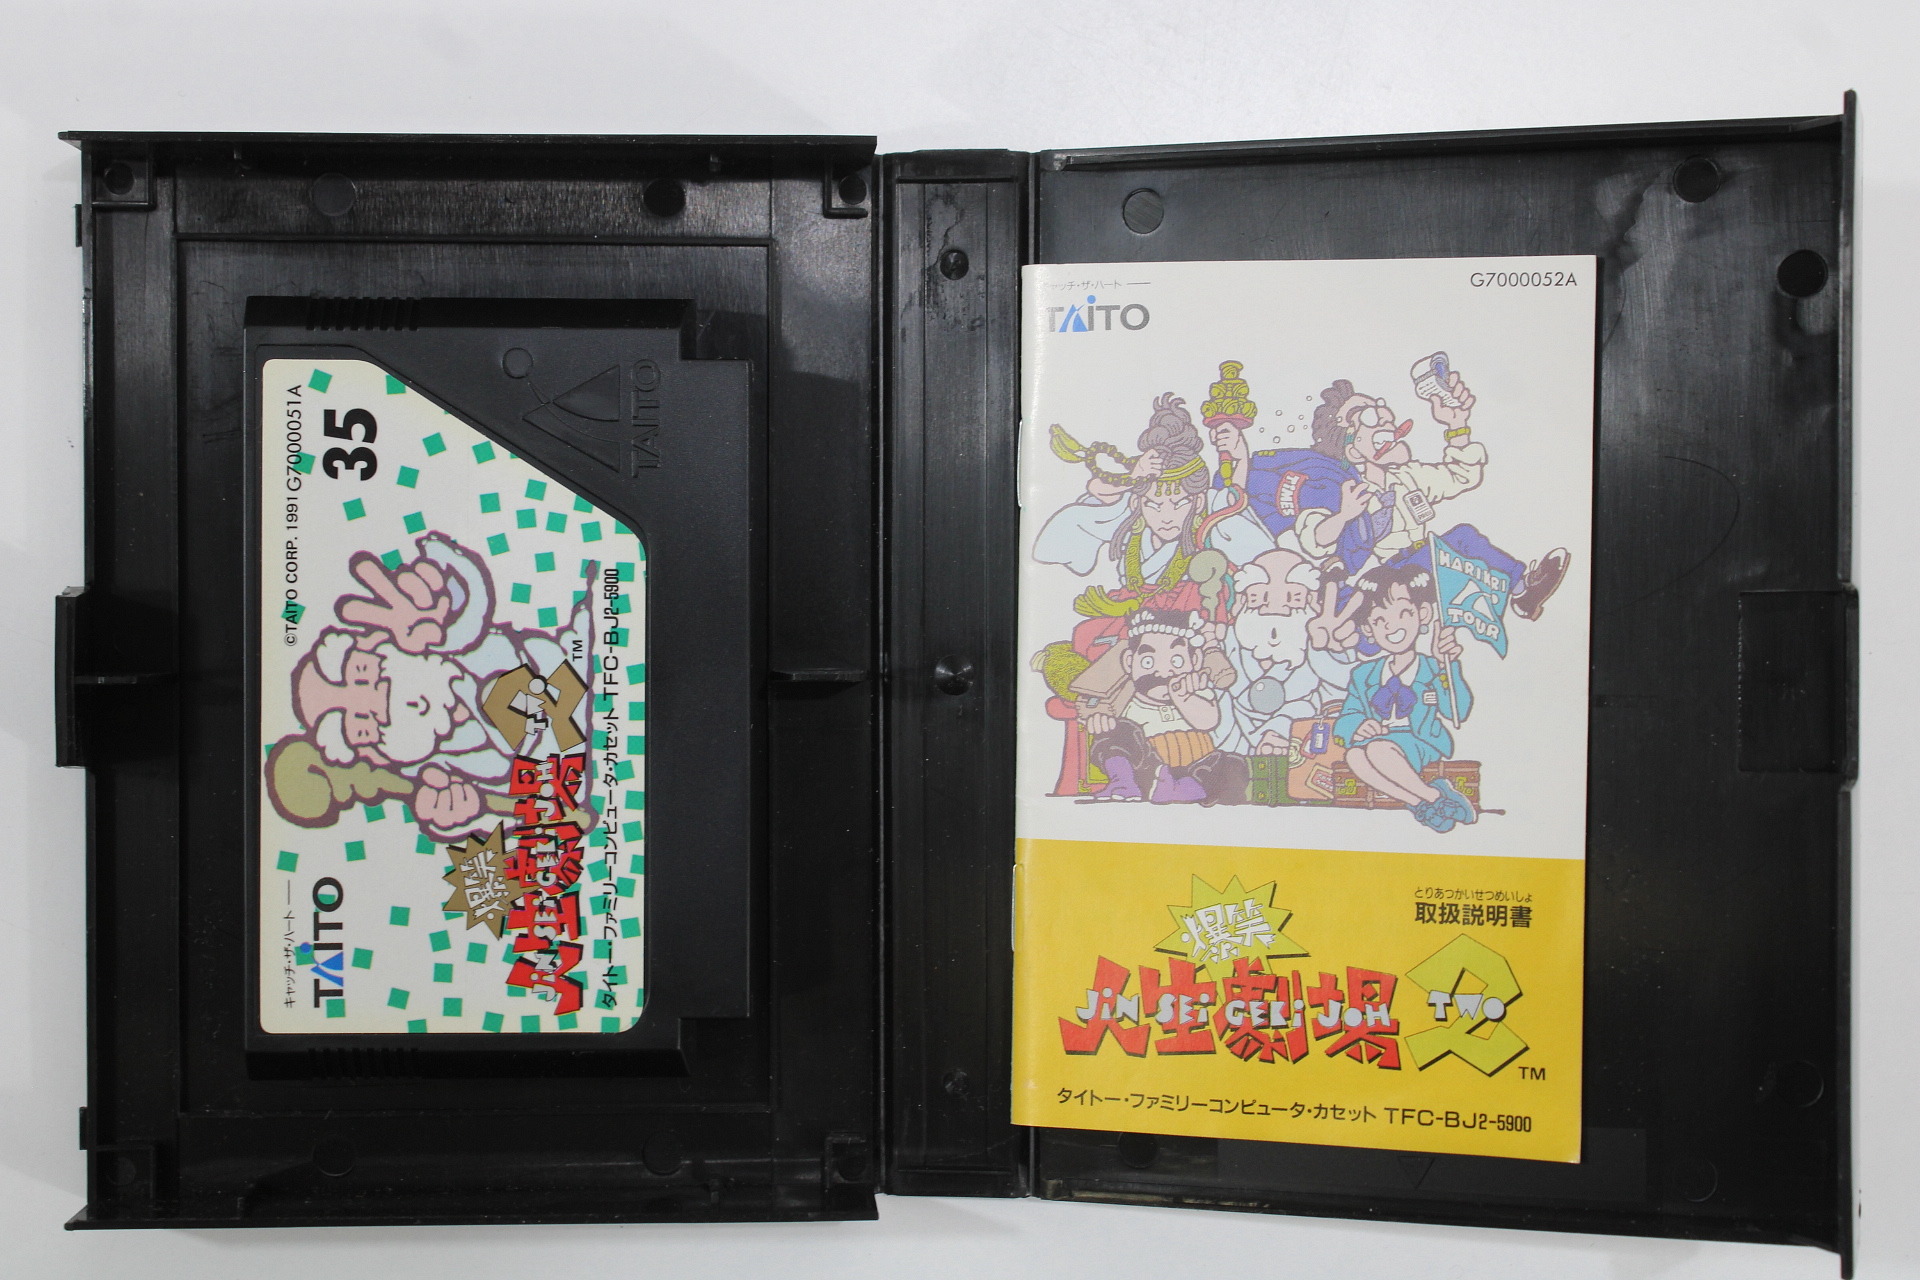 Lot of 9 Boxed Famicom Games FC (B)